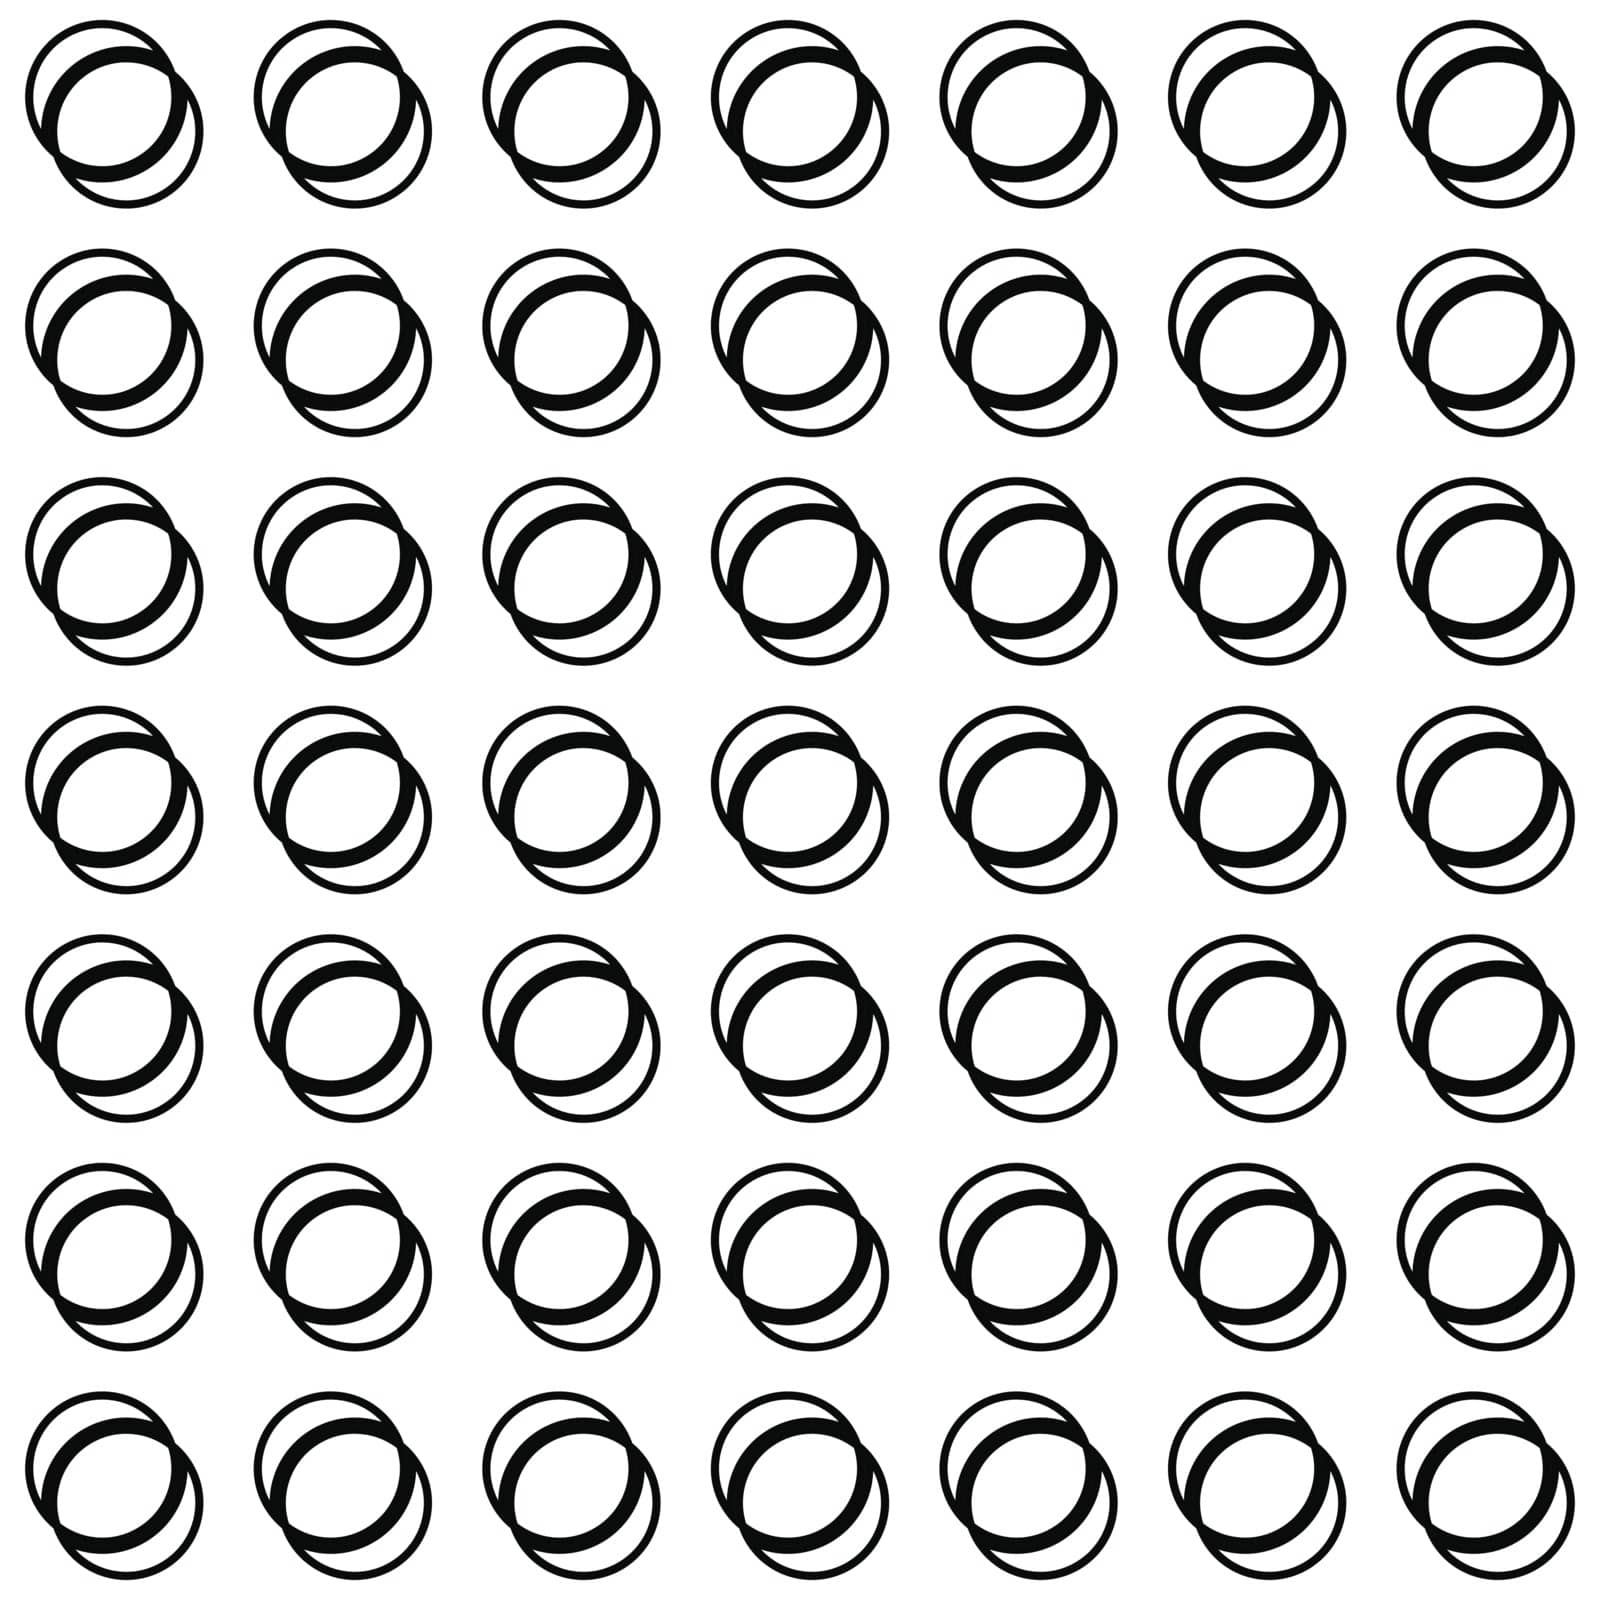 Seamless pattern with interlocking circles. Vector art.